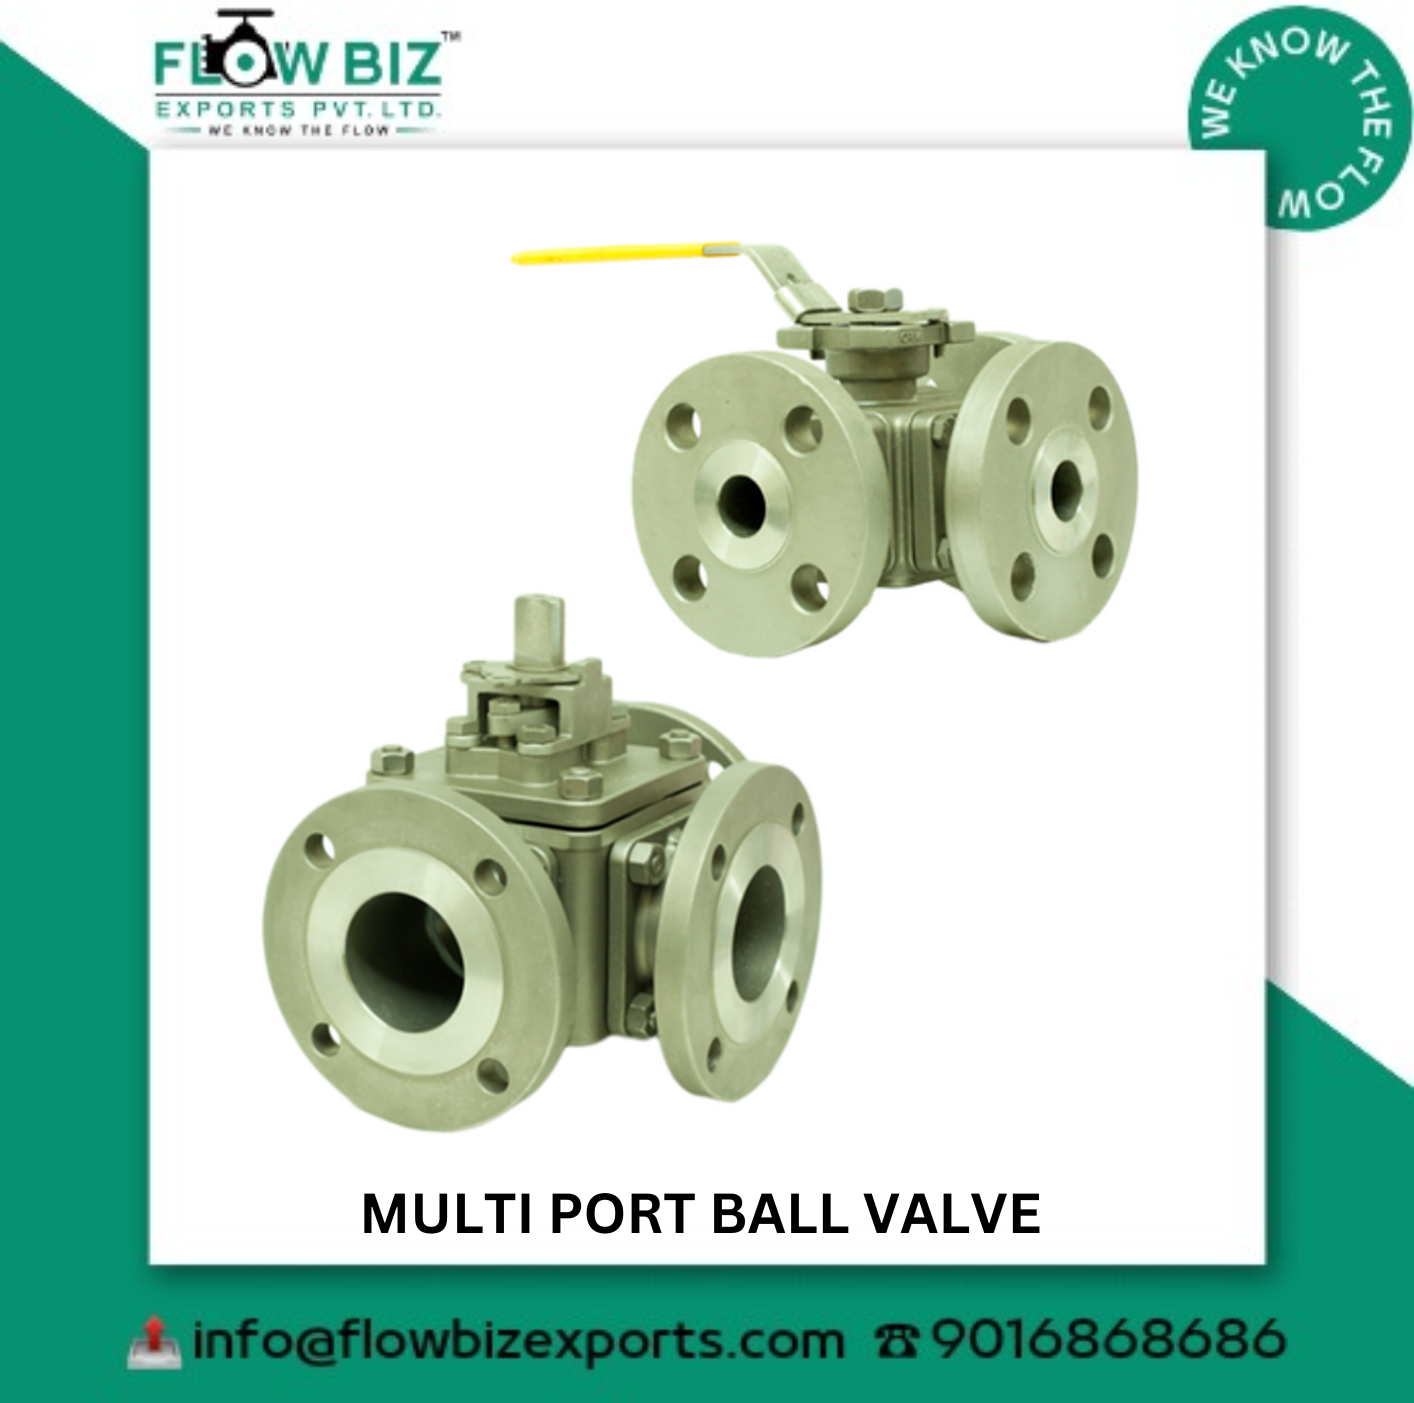 multi-port ball valve manufacturer ahmedabad - Flowbiz